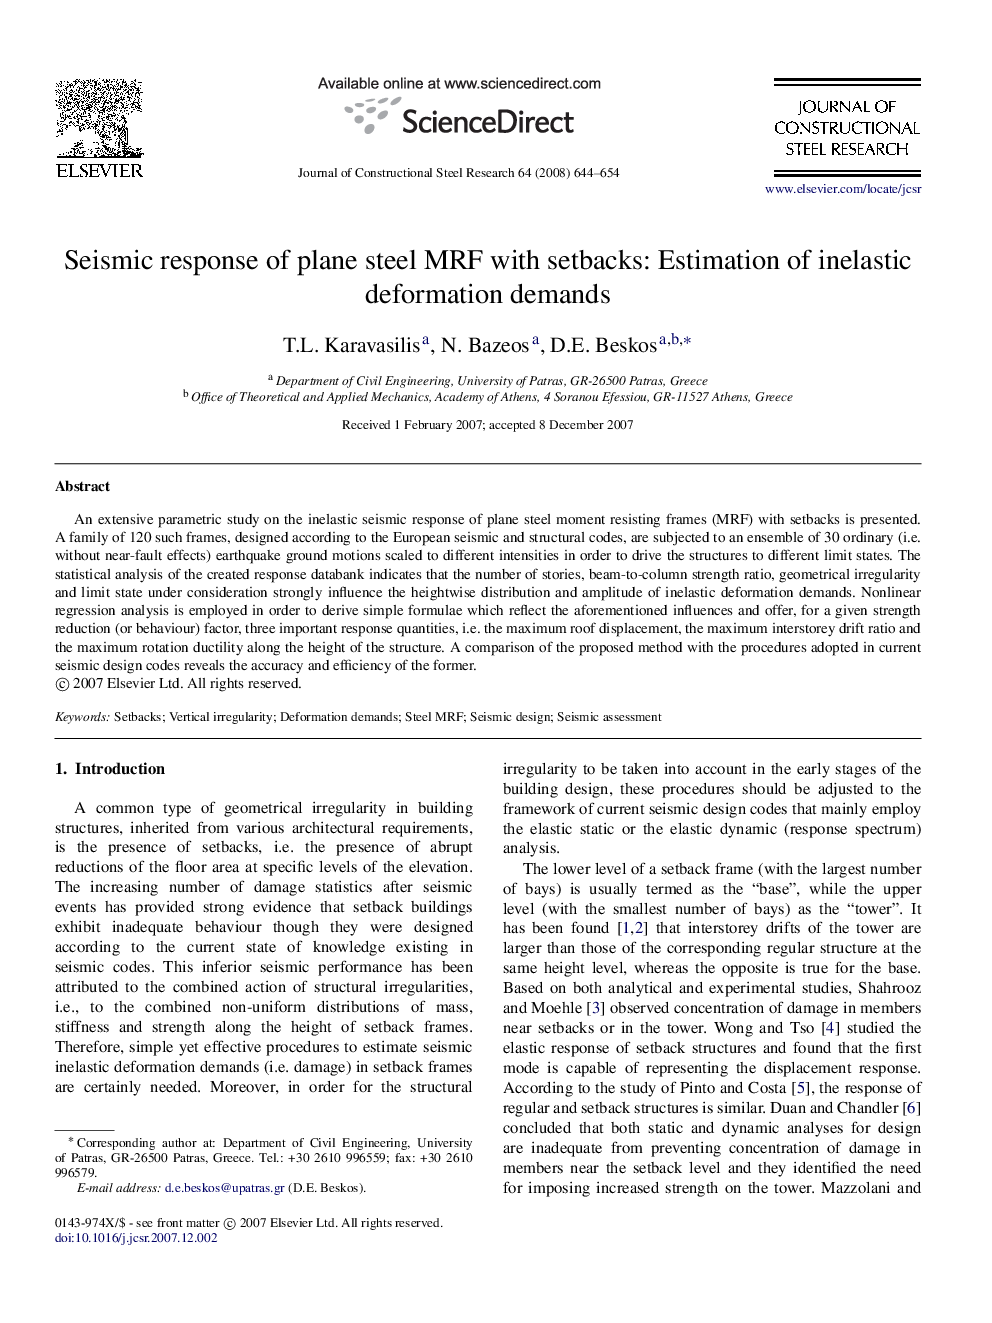 Seismic response of plane steel MRF with setbacks: Estimation of inelastic deformation demands